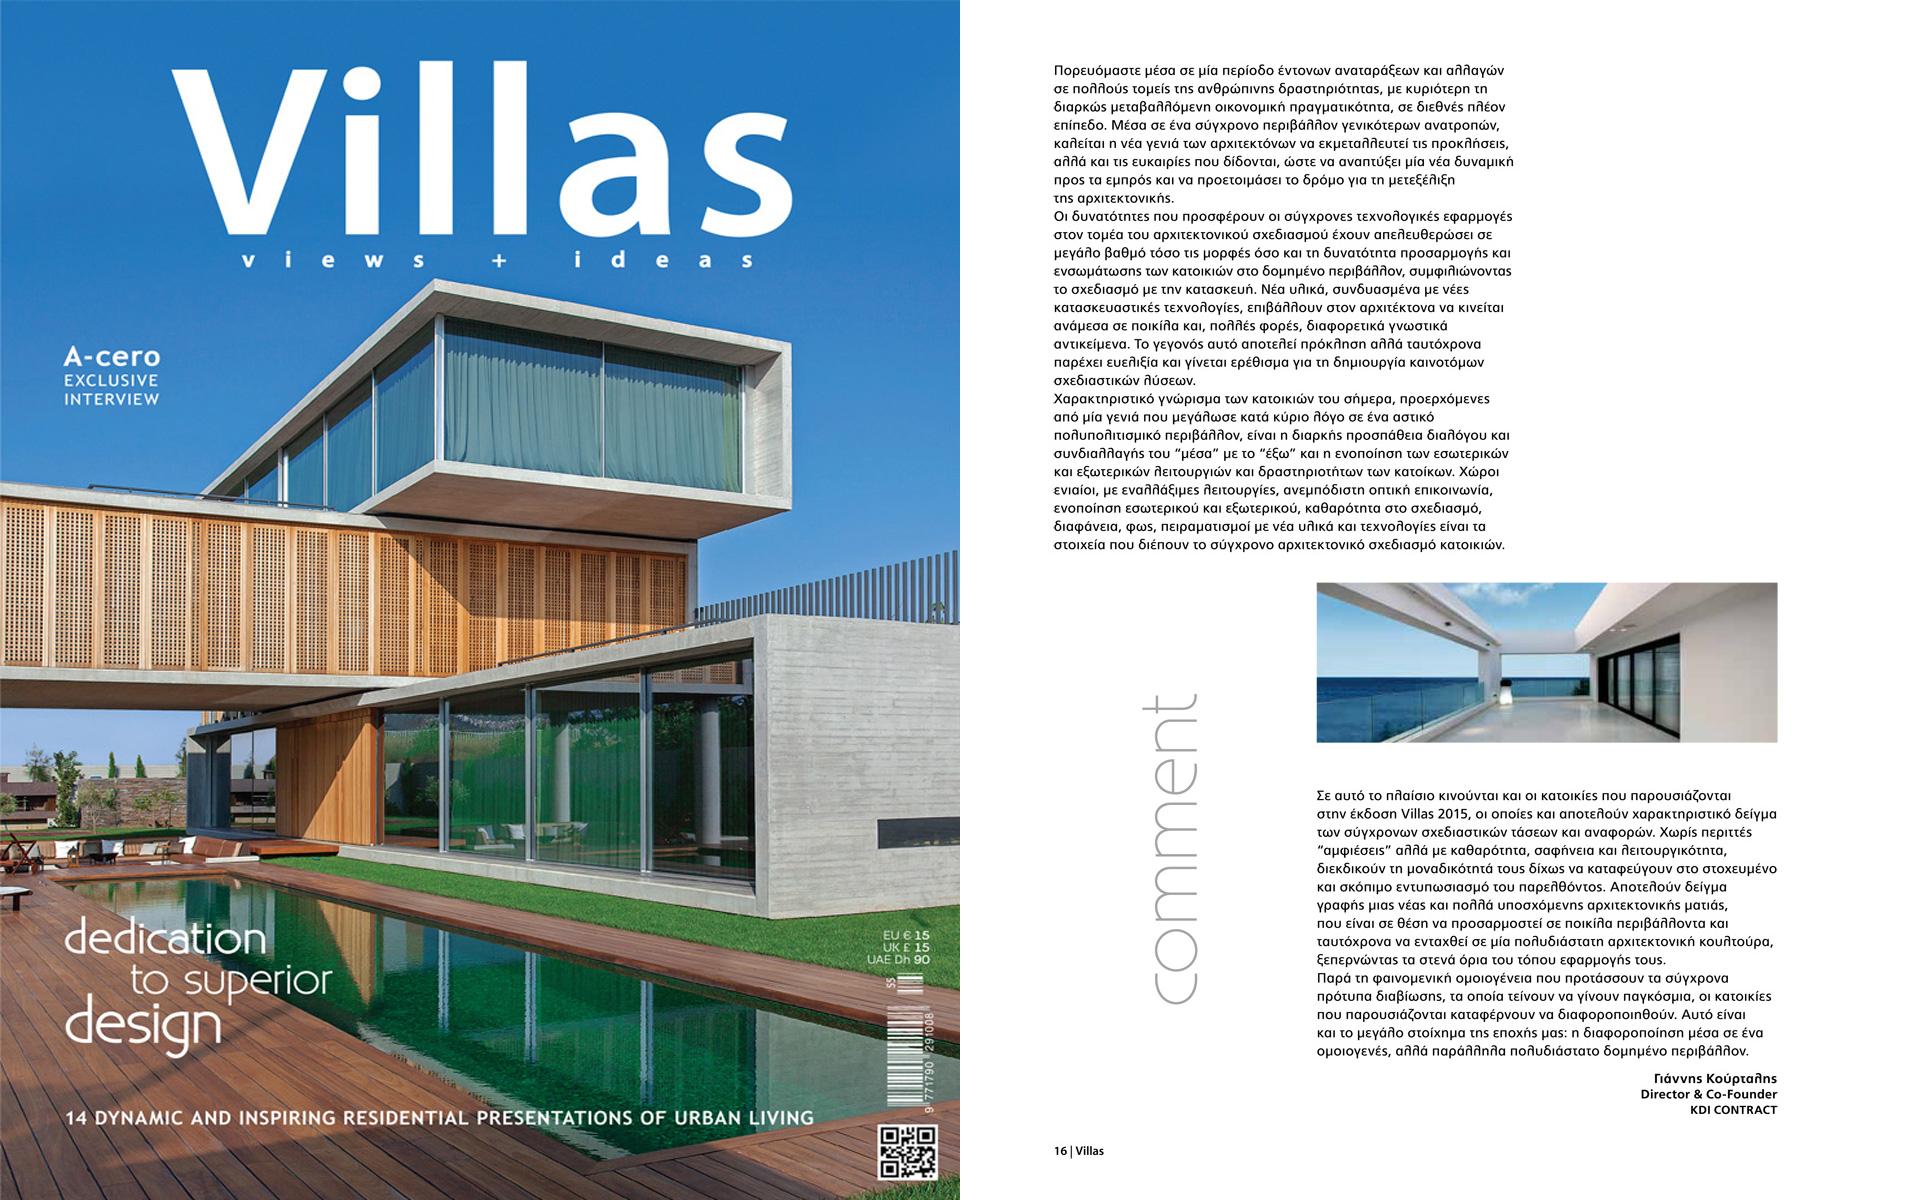 Editorial Γιάννη Κούρταλη περιοδικό VILLAS 2015 - KDI CONTRACT